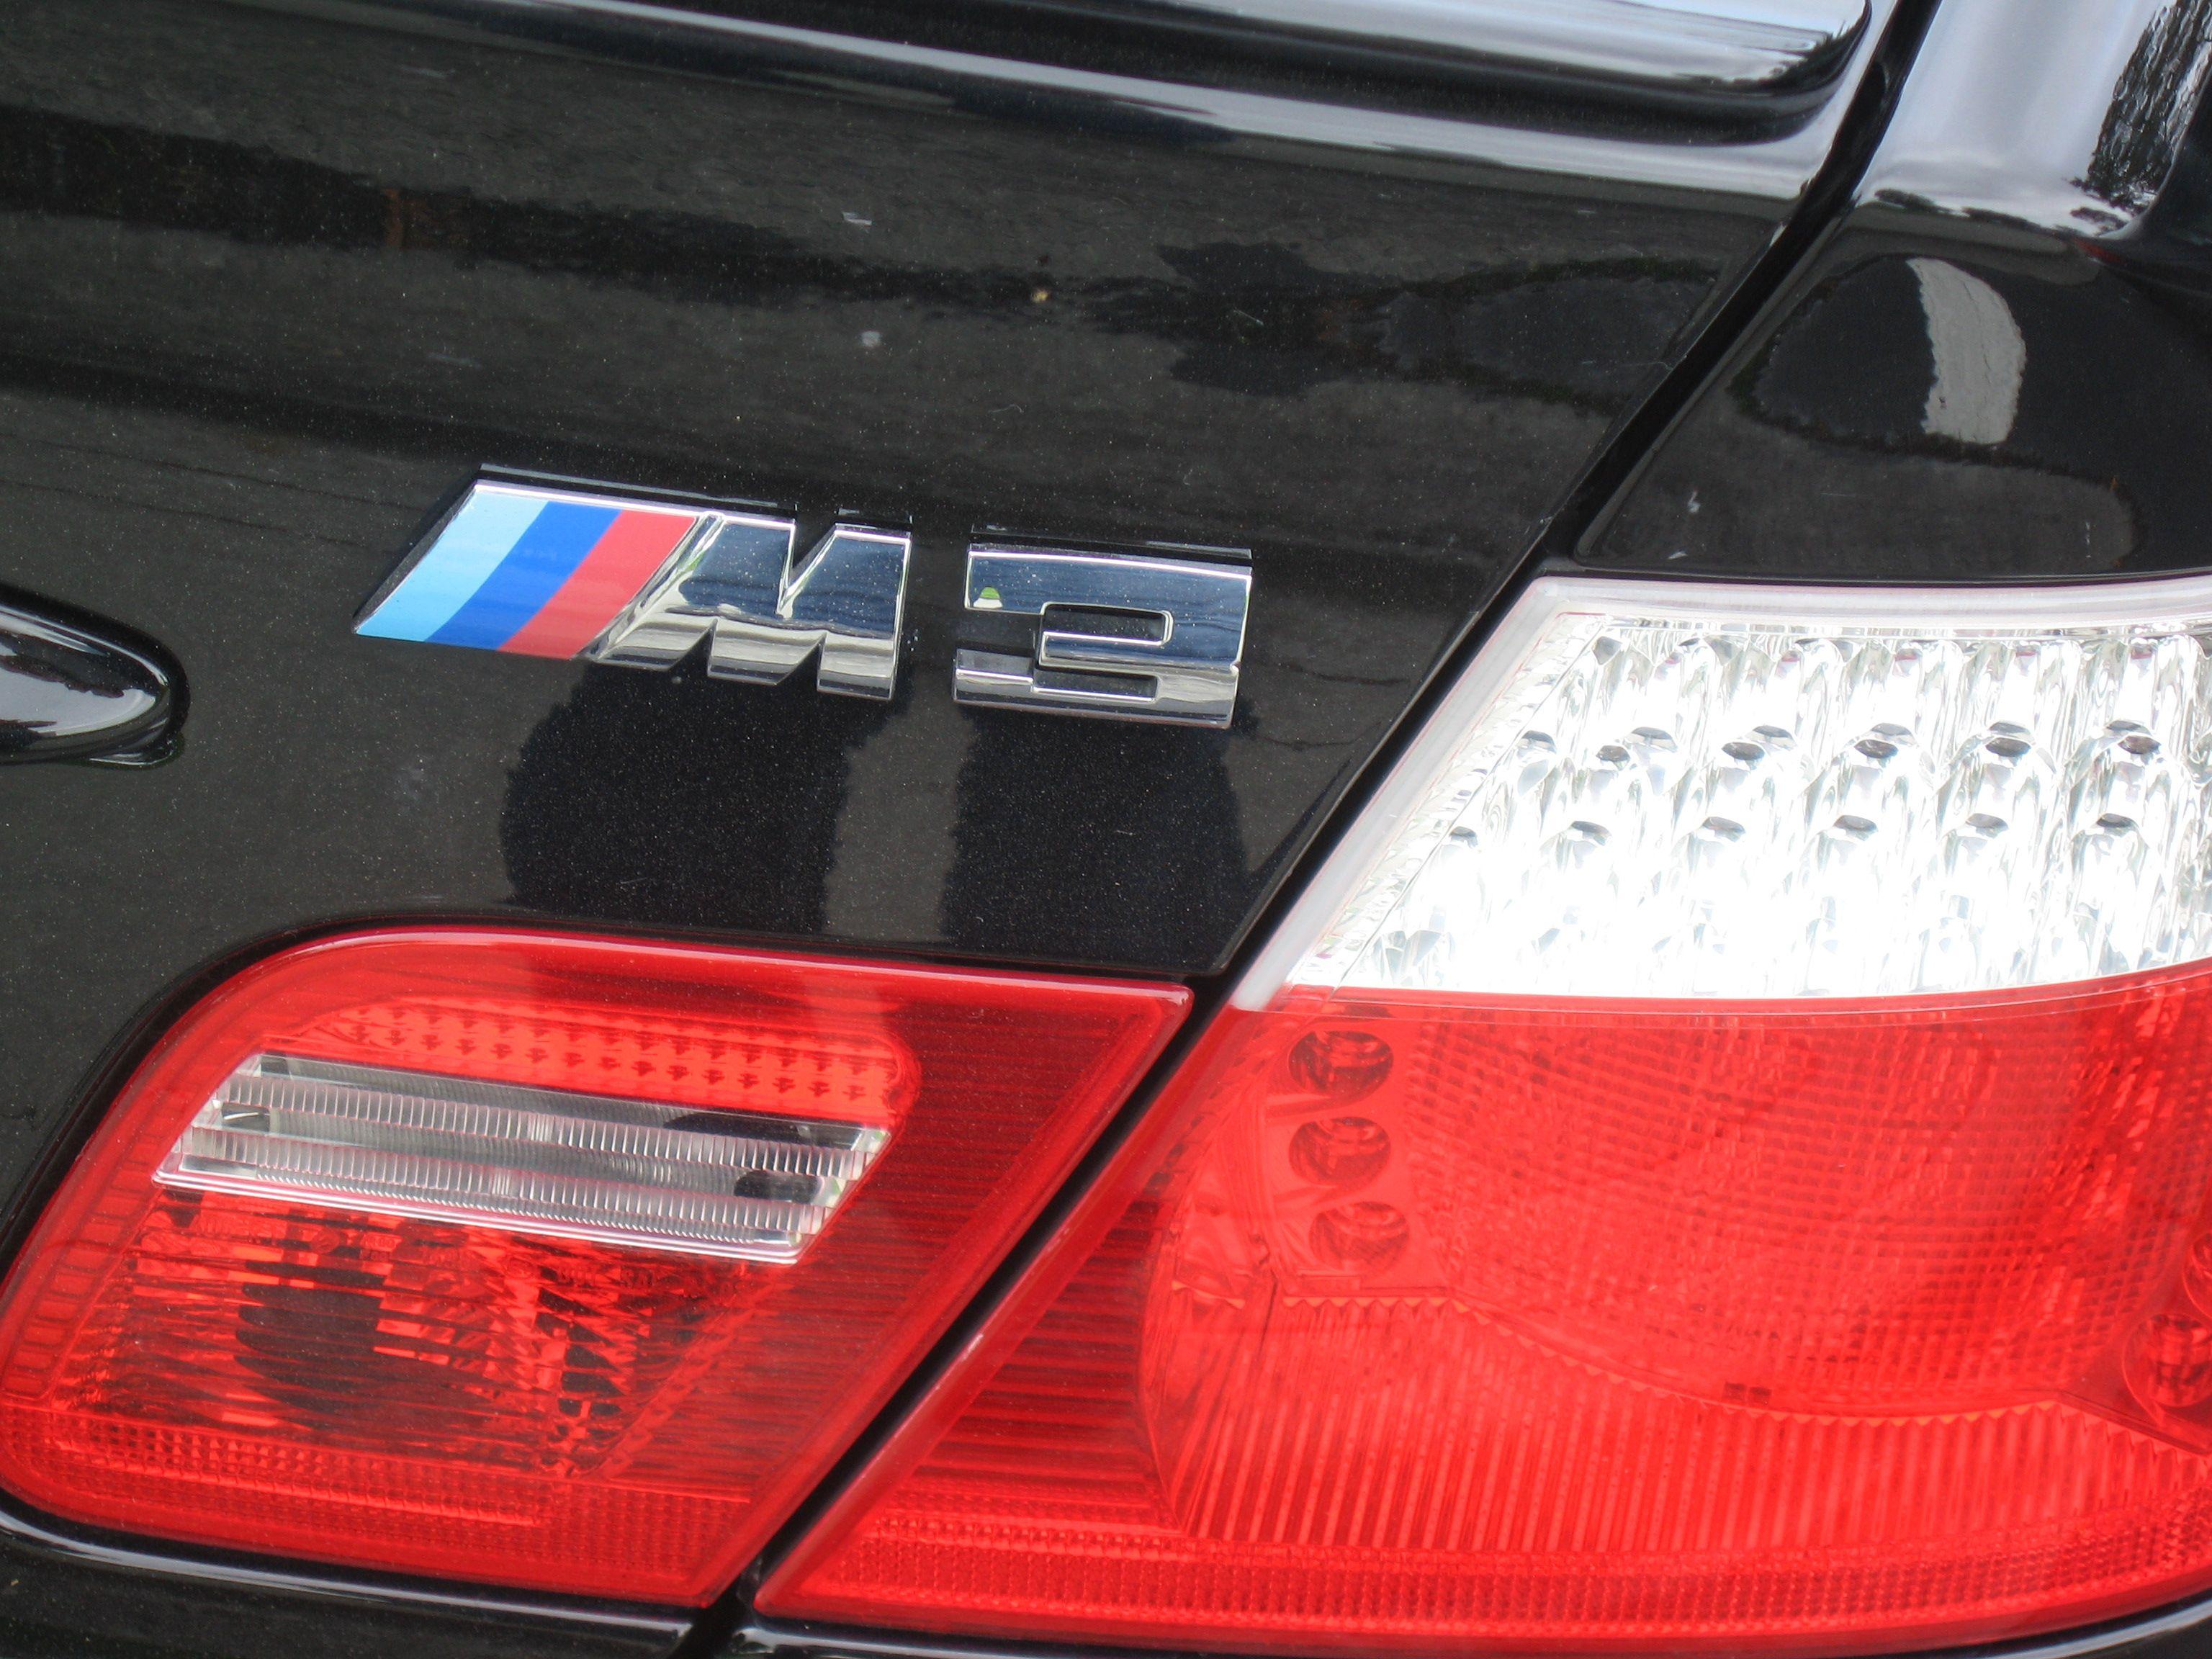 BMW M3 Logo - File:Black BMW M3 E46 writing - badge - logo.jpg - Wikimedia Commons